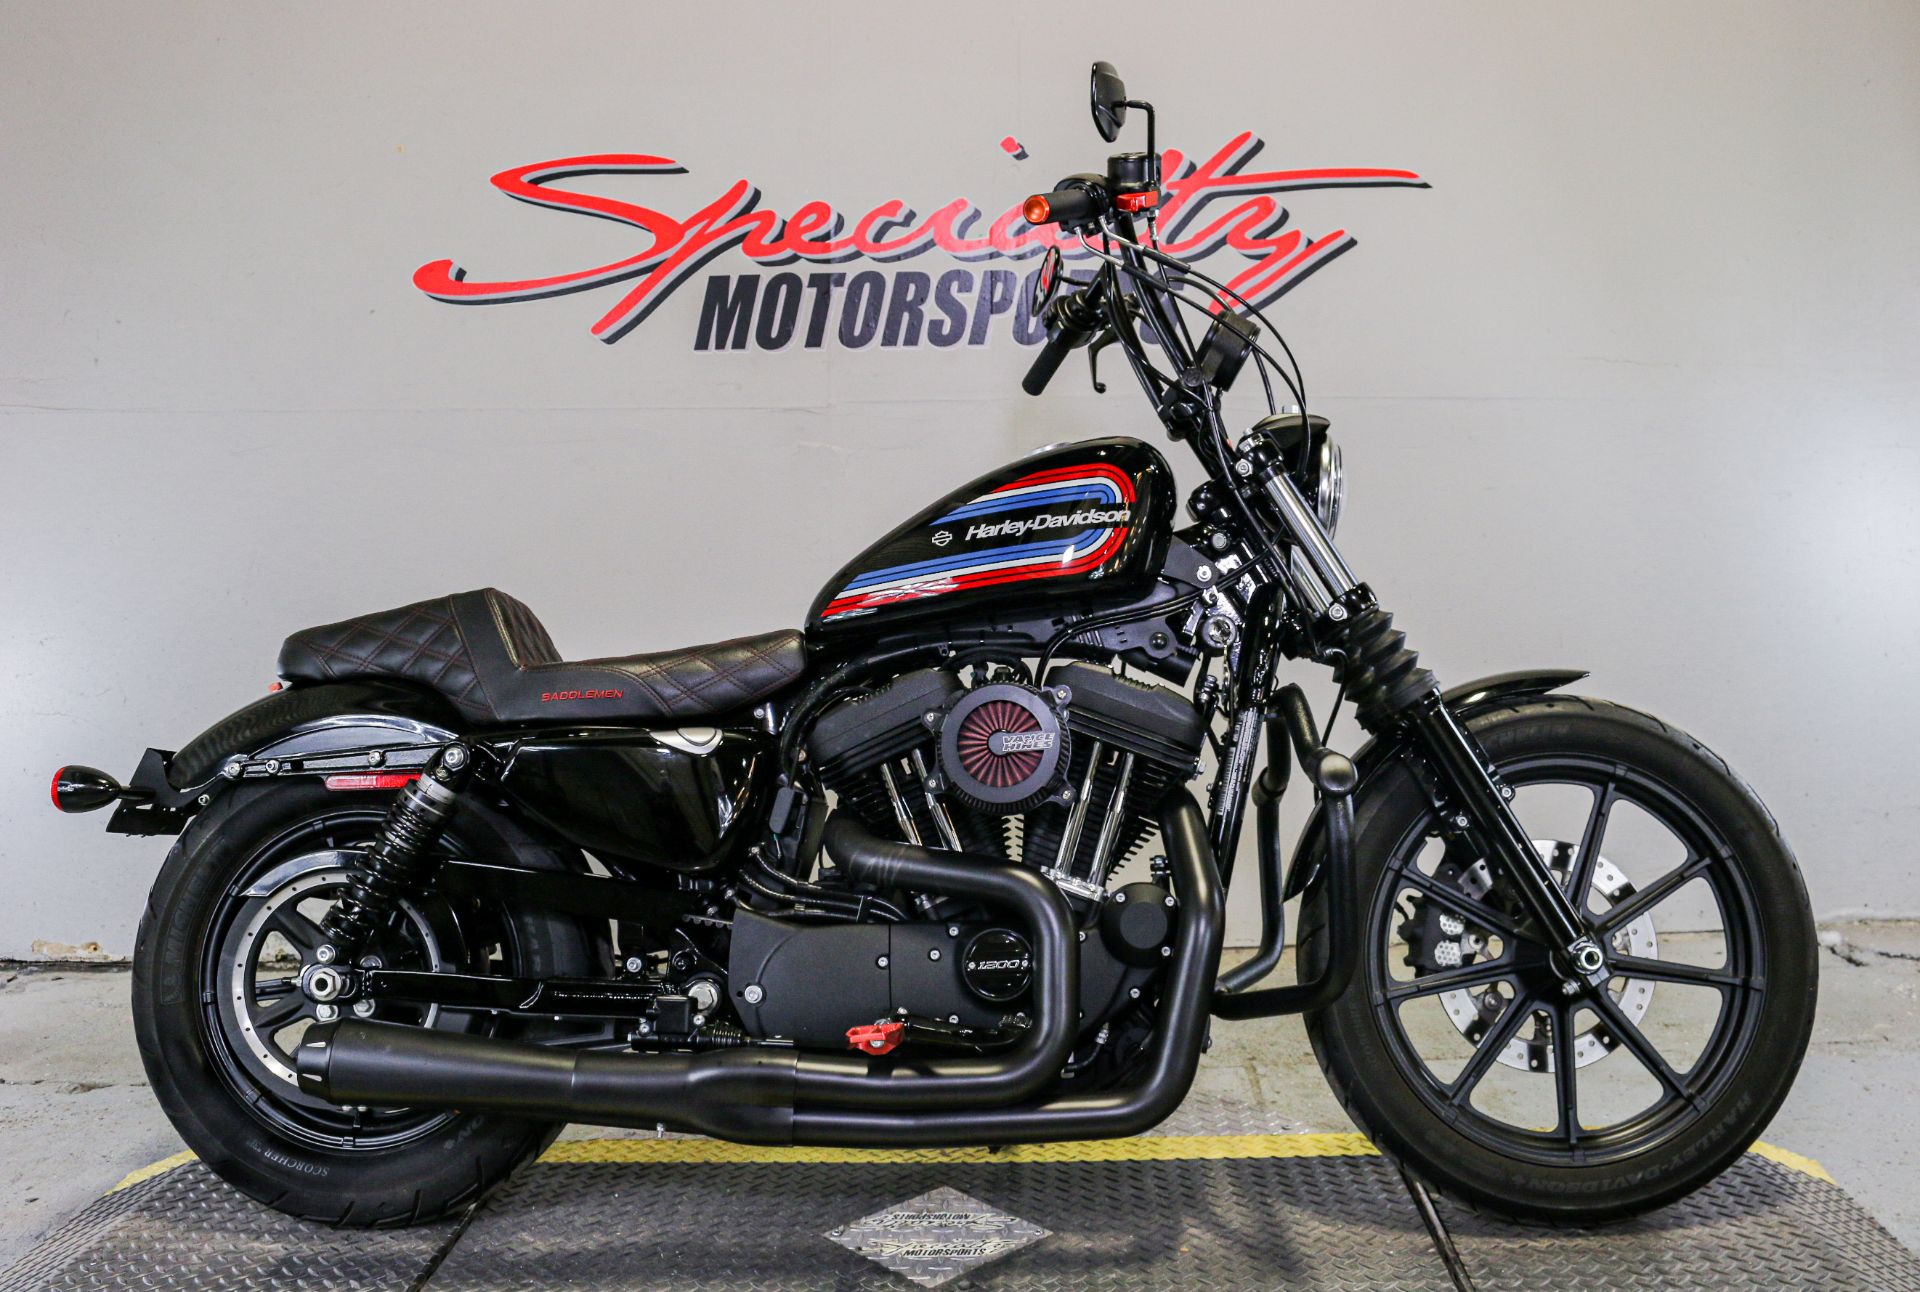 2020 Harley-Davidson Iron 1200™ in Sacramento, California - Photo 1